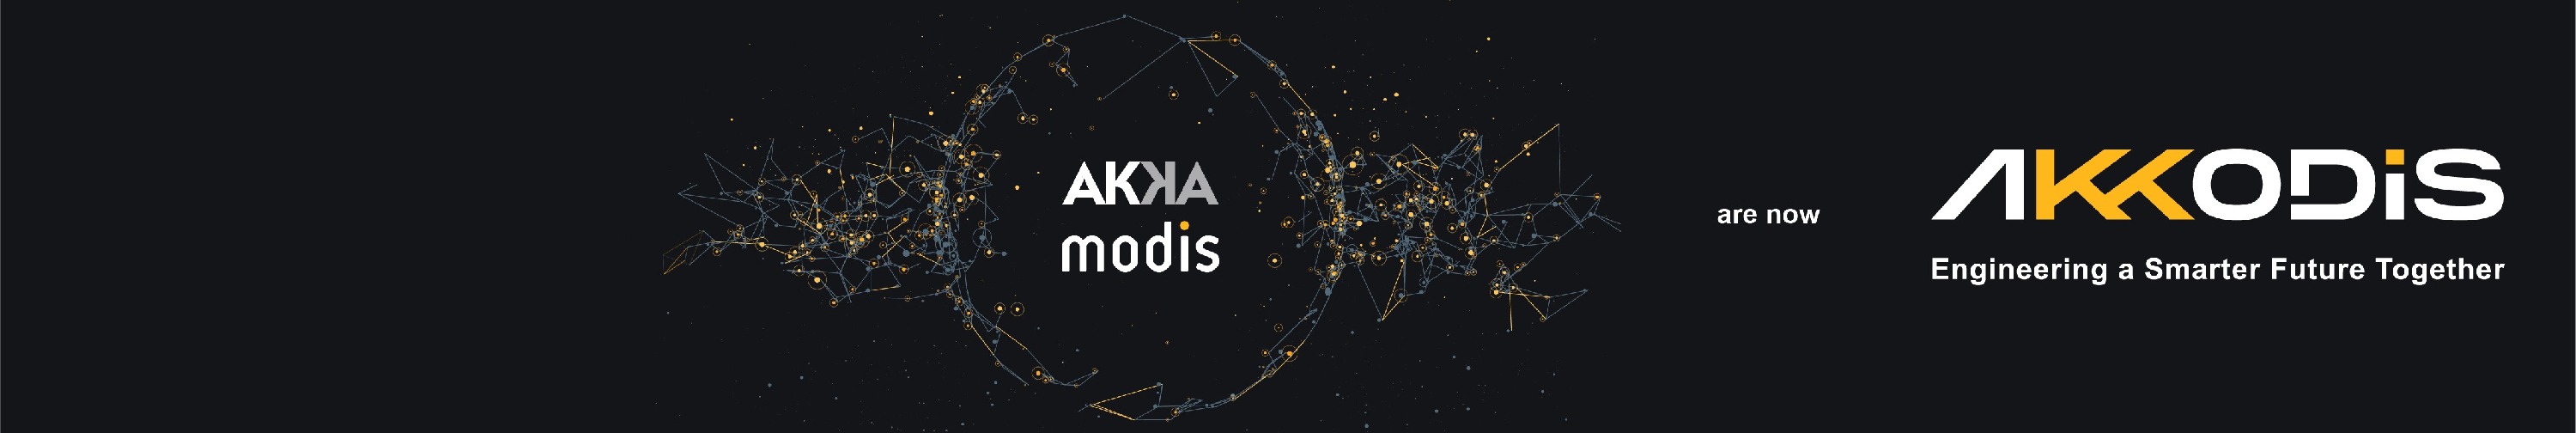 AKKA Technologies background